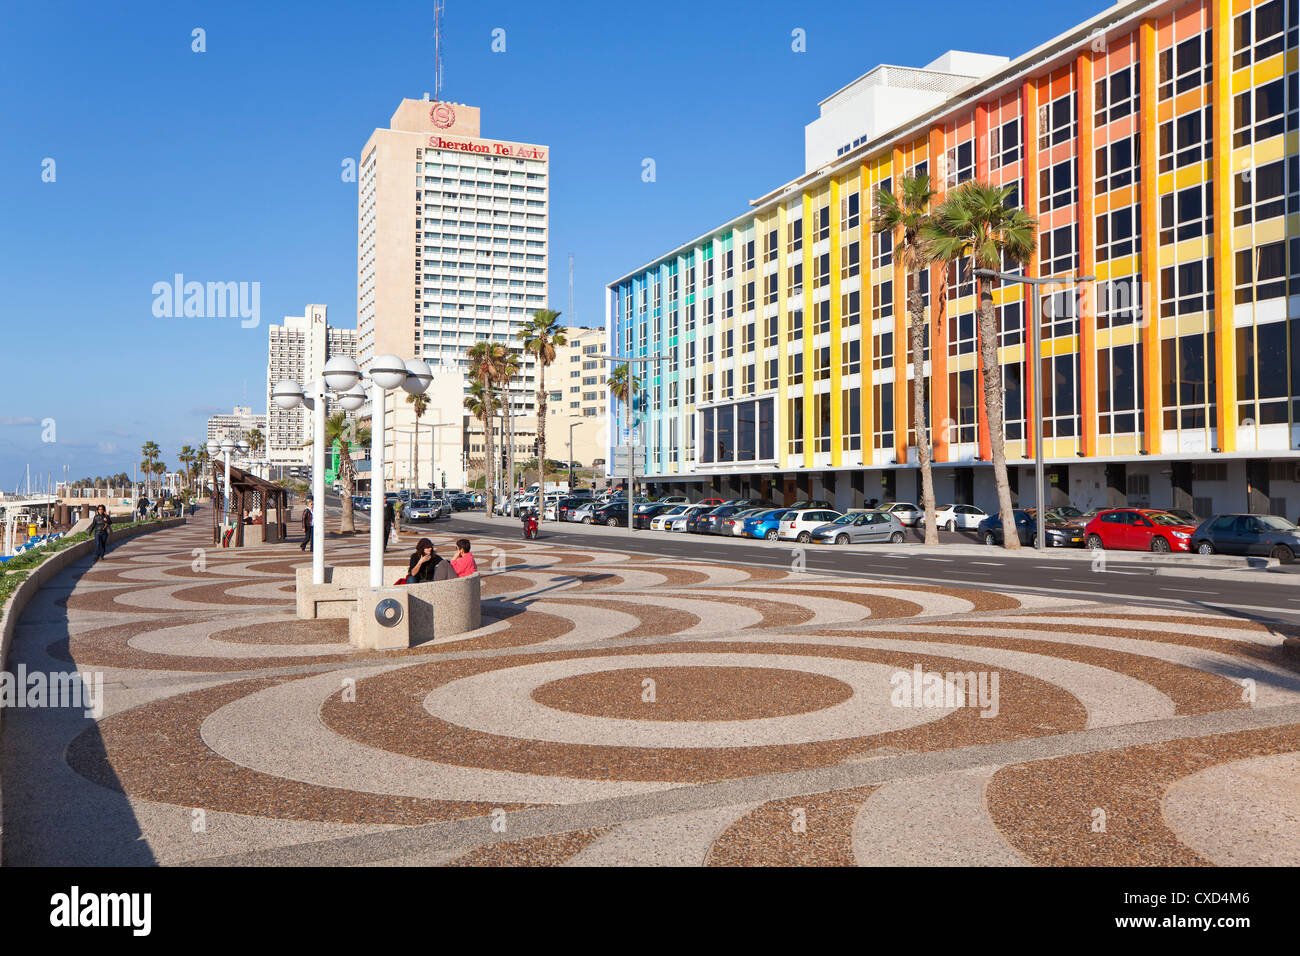 La promenade du bord de mer en face de l'hôtel décorée dans des façades, Tel Aviv, Israël, Moyen Orient Banque D'Images